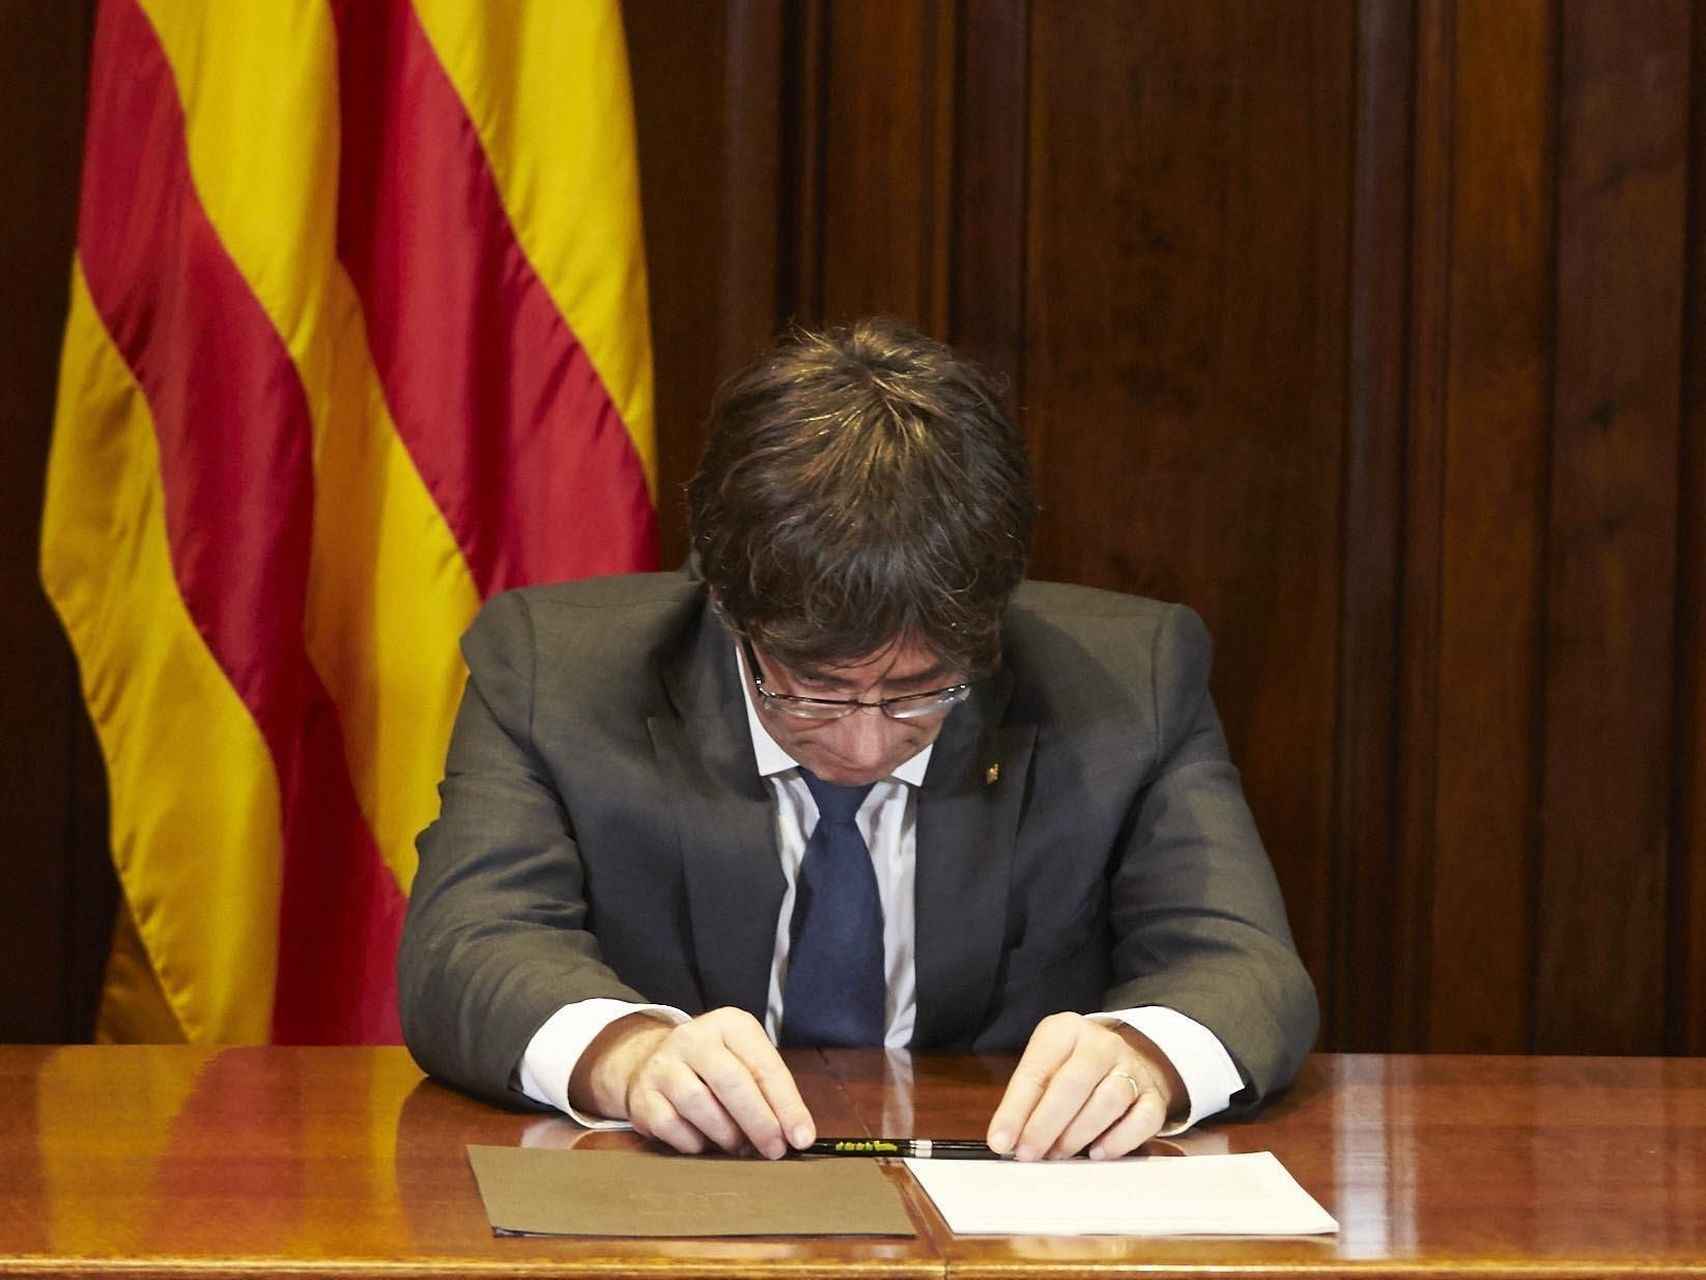 El presidente de la Generalitat, Carles Puigdemont.